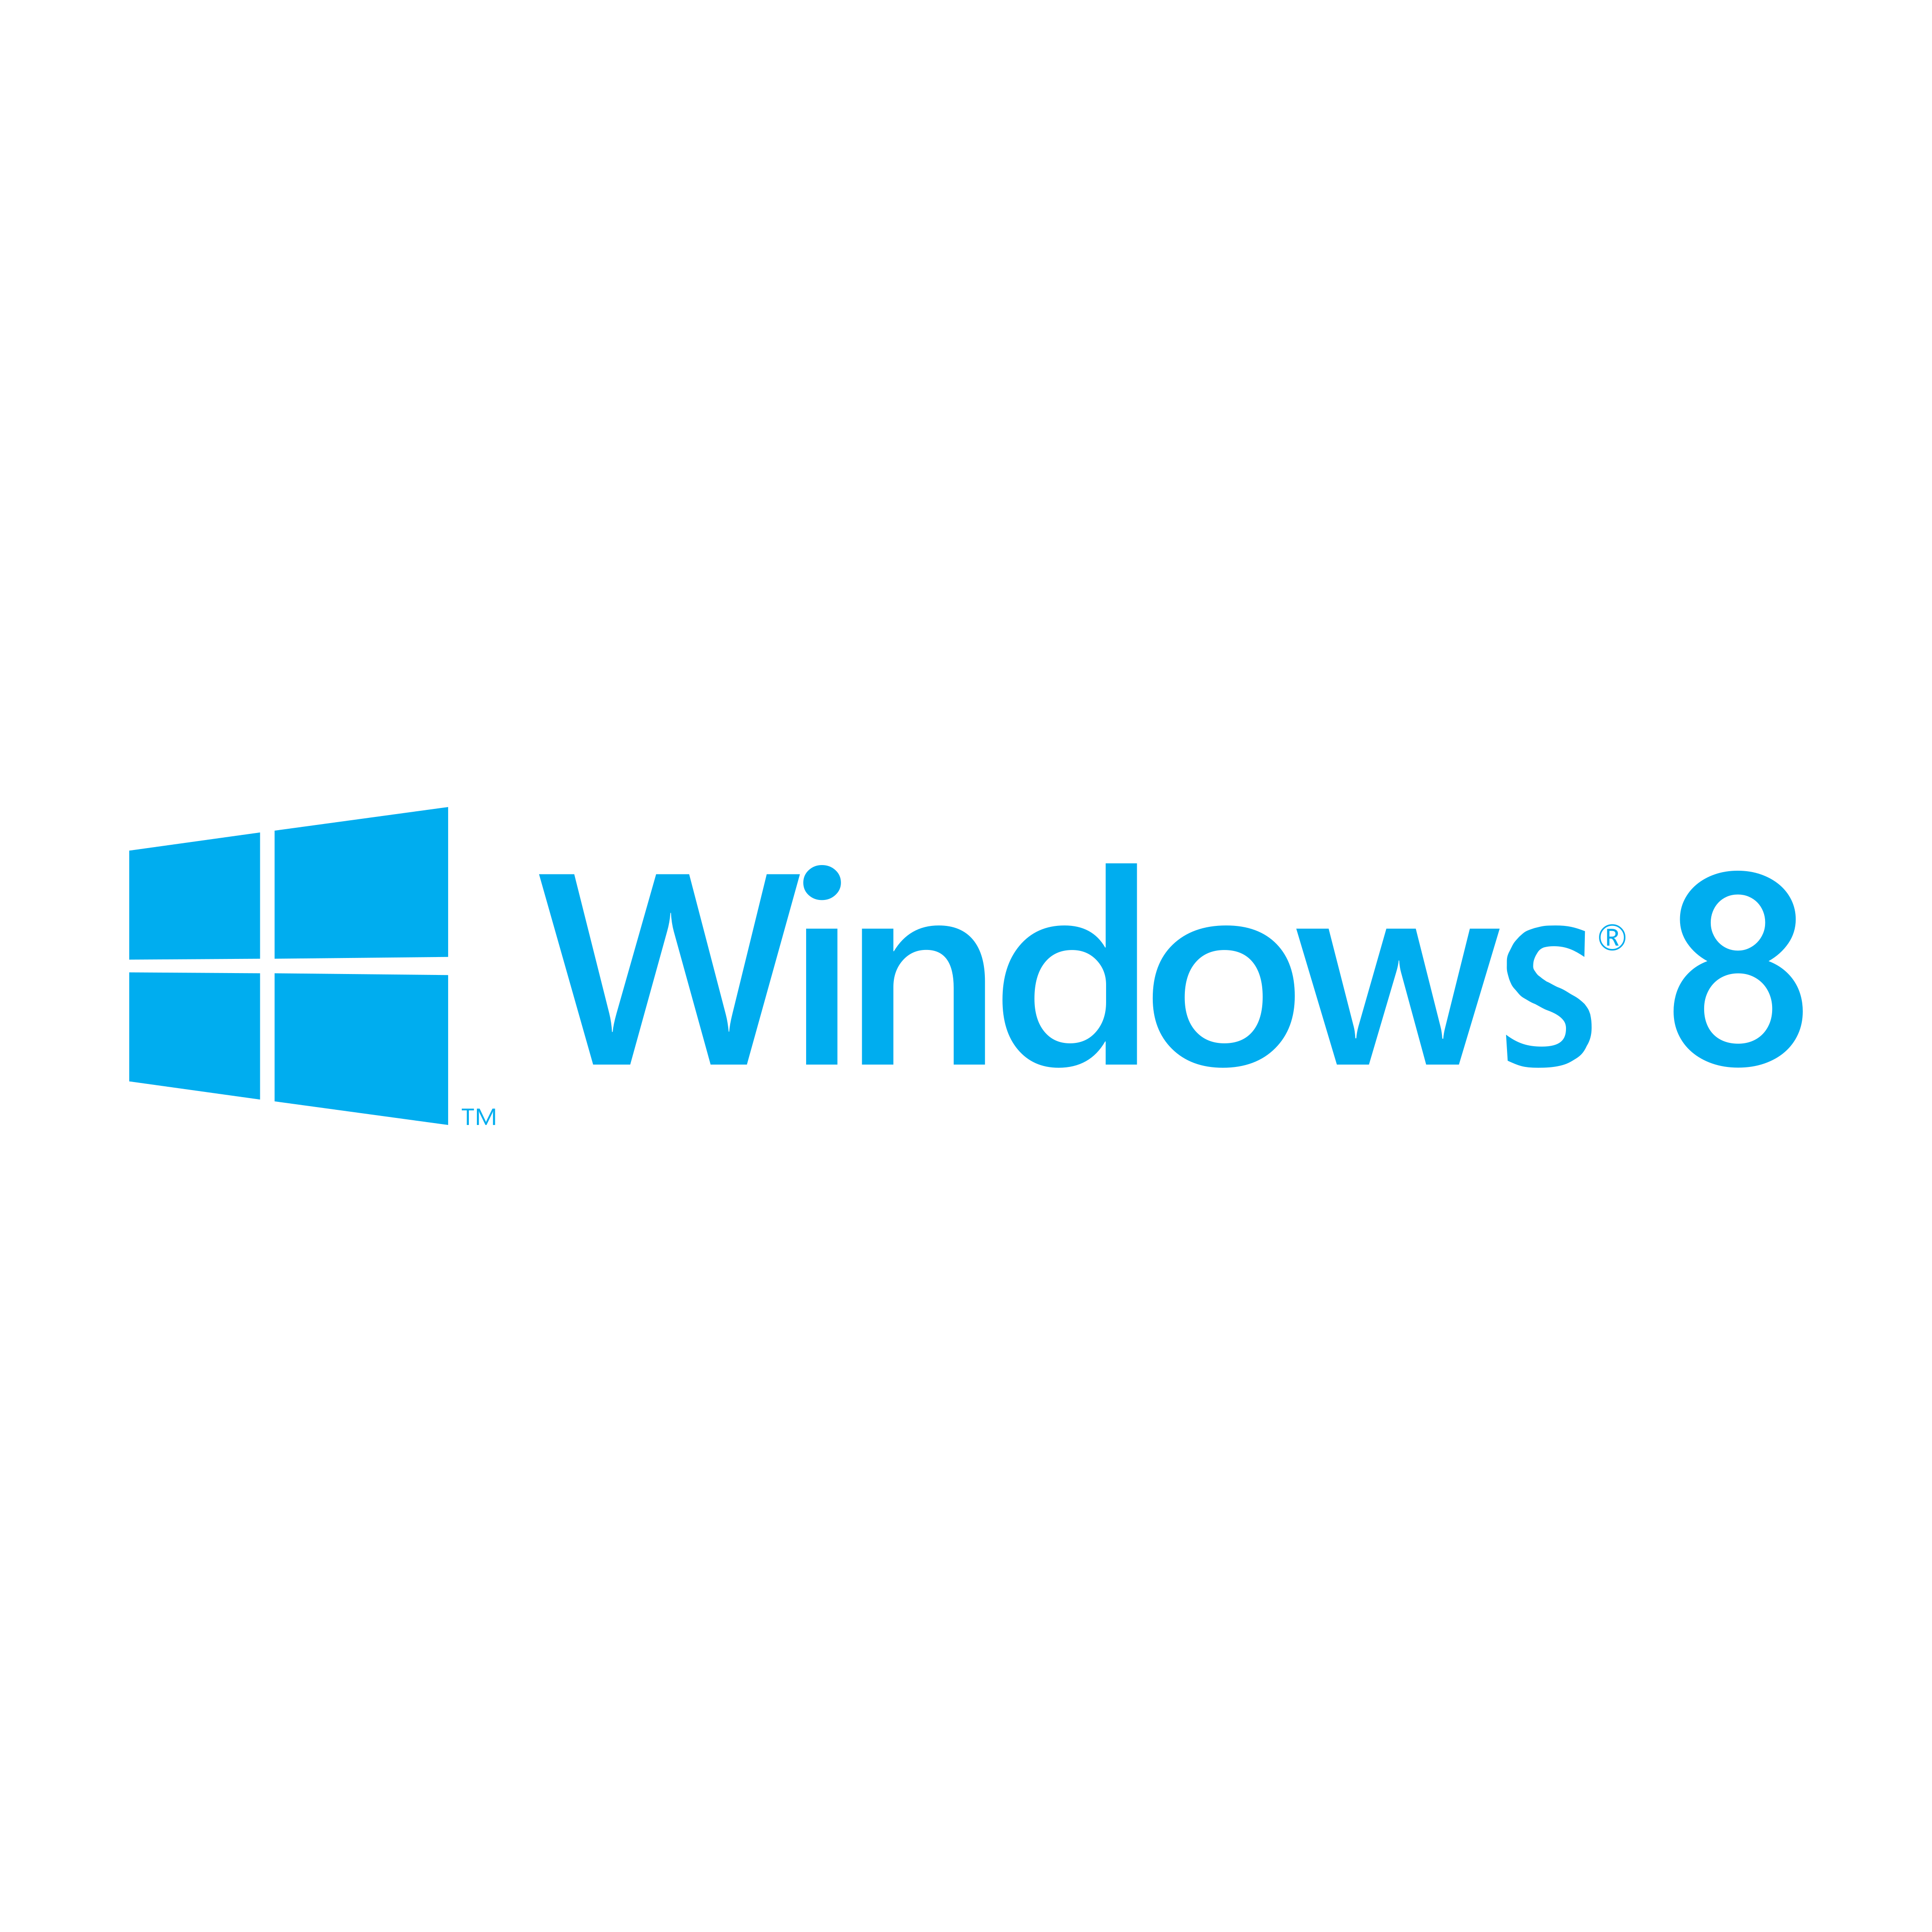 windows 8 logo 0 - Windows 8 Logo